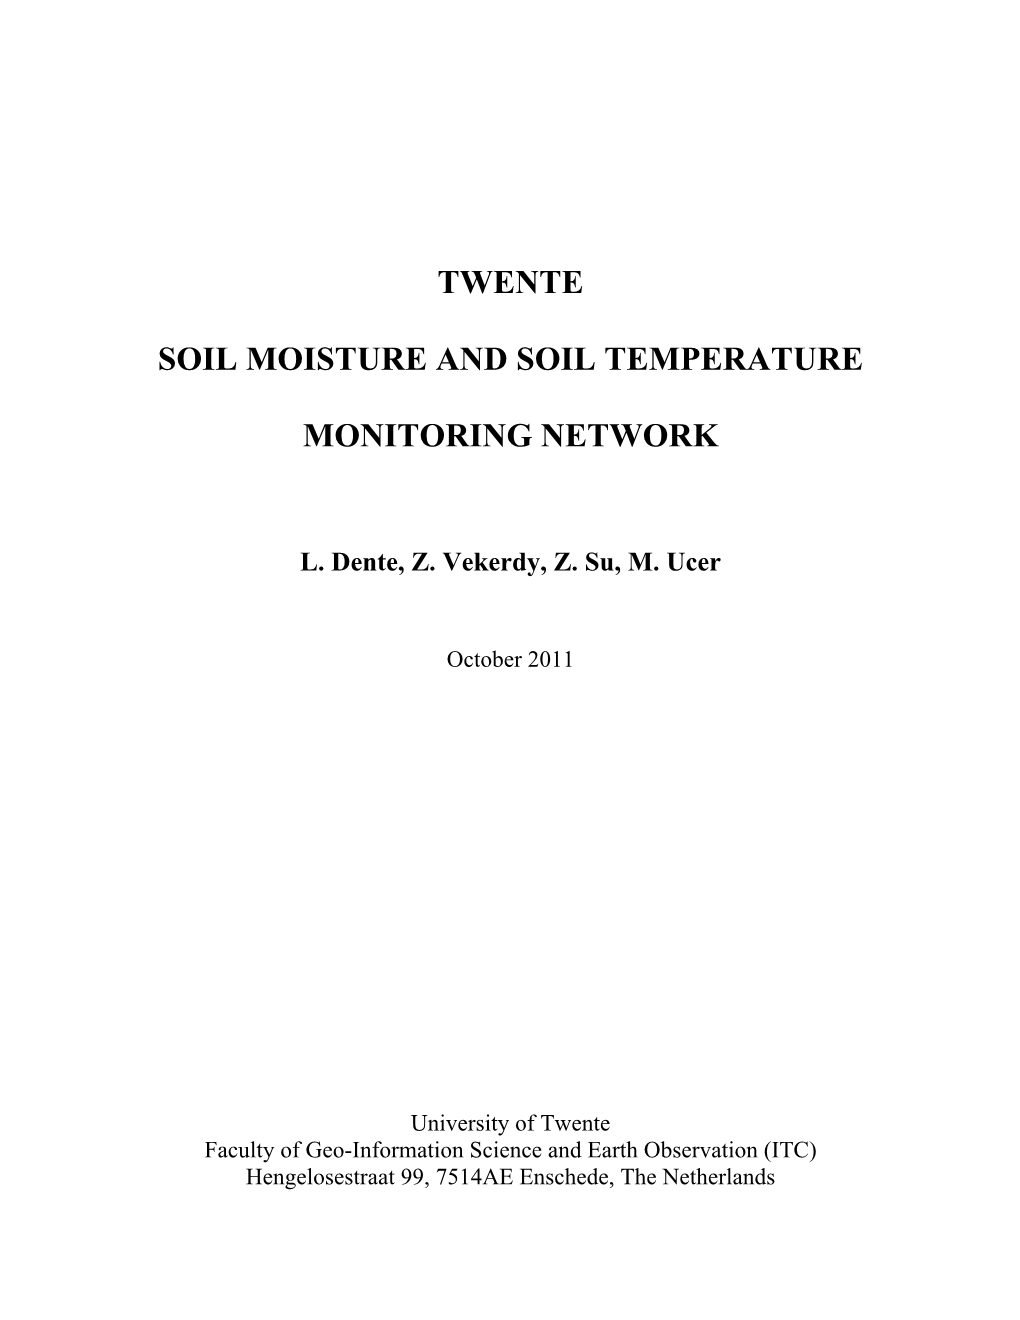 Twente Soil Moisture and Soil Temperature Monitoring Network L